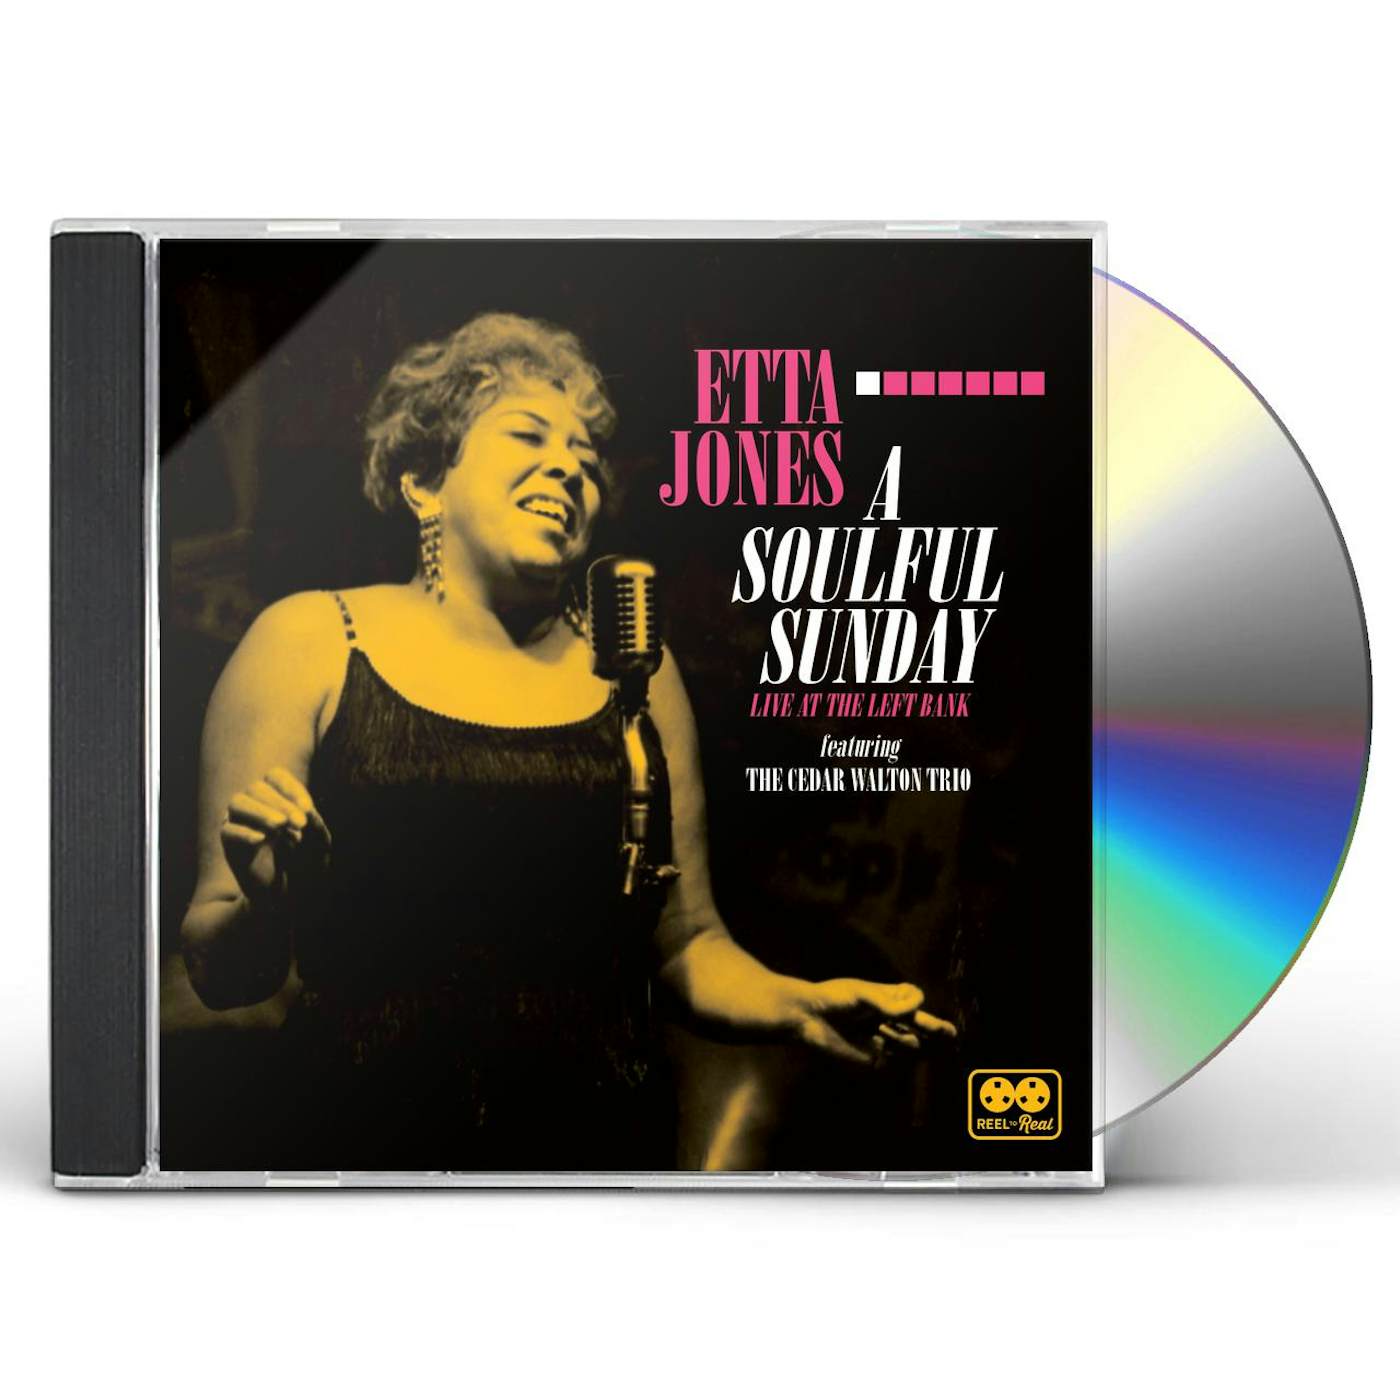 Etta Jones SOULFUL SUNDAY: LIVE AT THE LEFT BANK CD